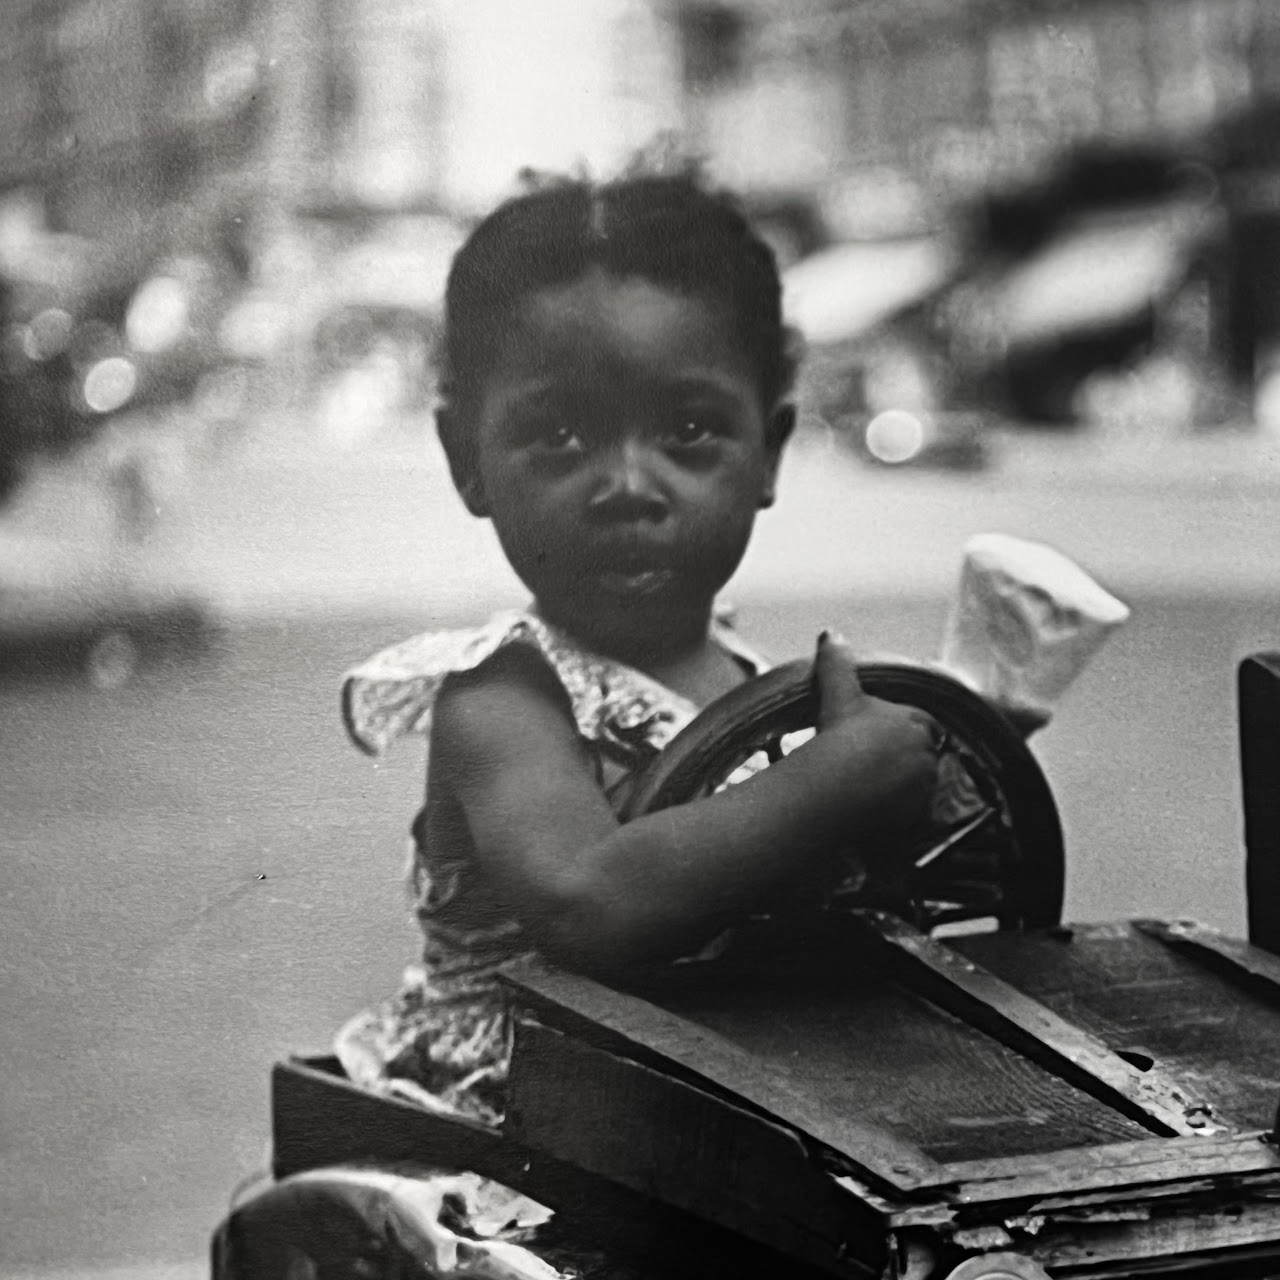 Fred Stein 'Harlem, 1947' Estate Signed Photograph